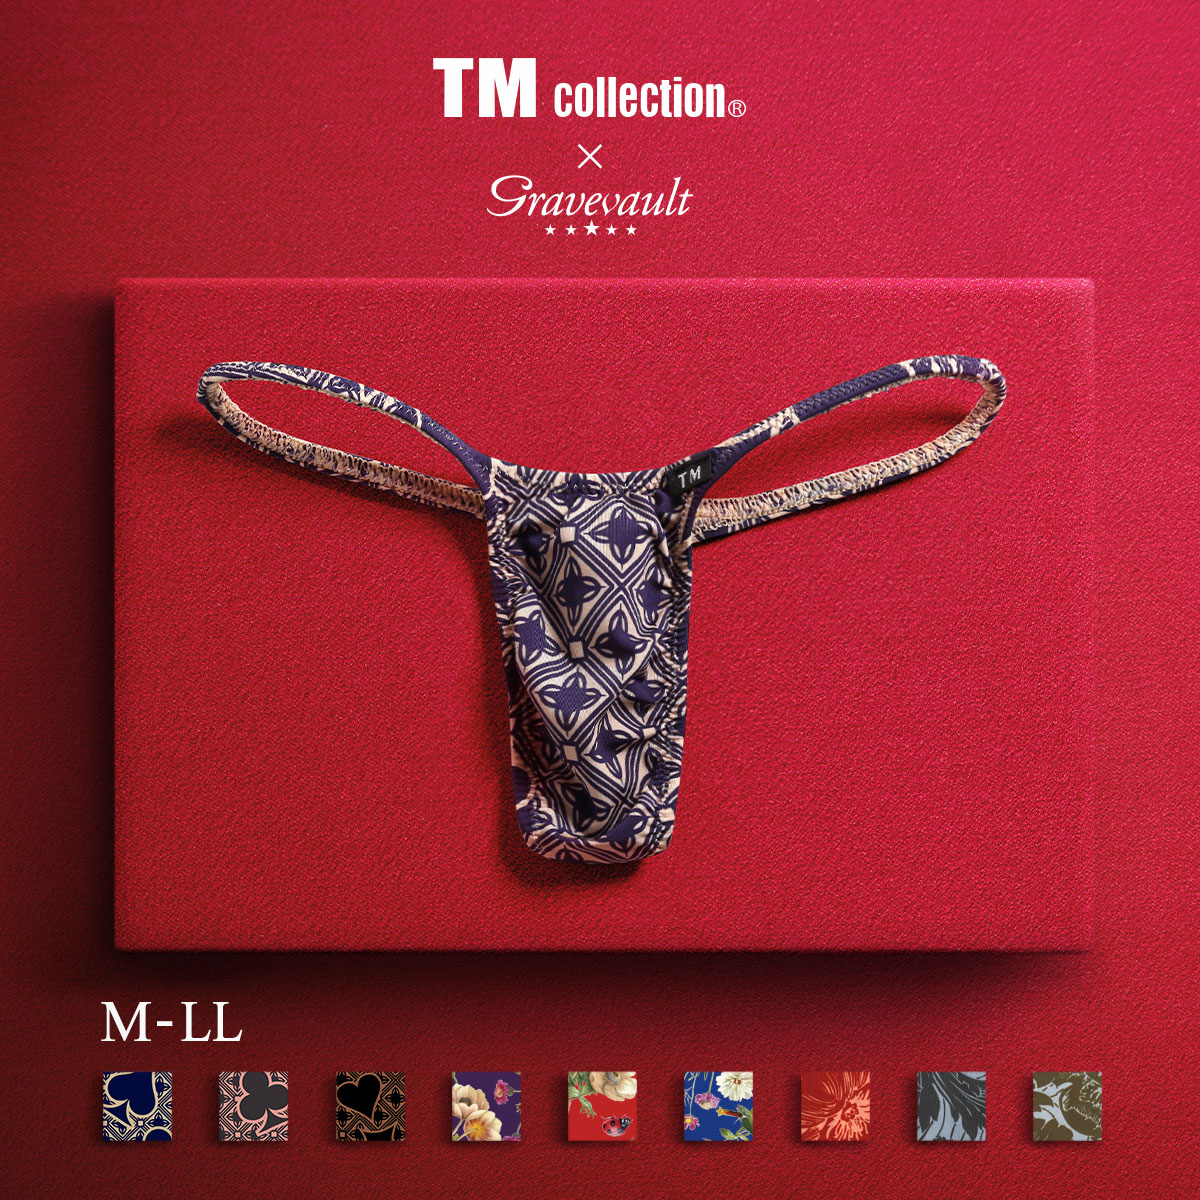  чай M коллекция TM collection×Gravevault×SHIROHATO Triple сотрудничество Archives T-back 